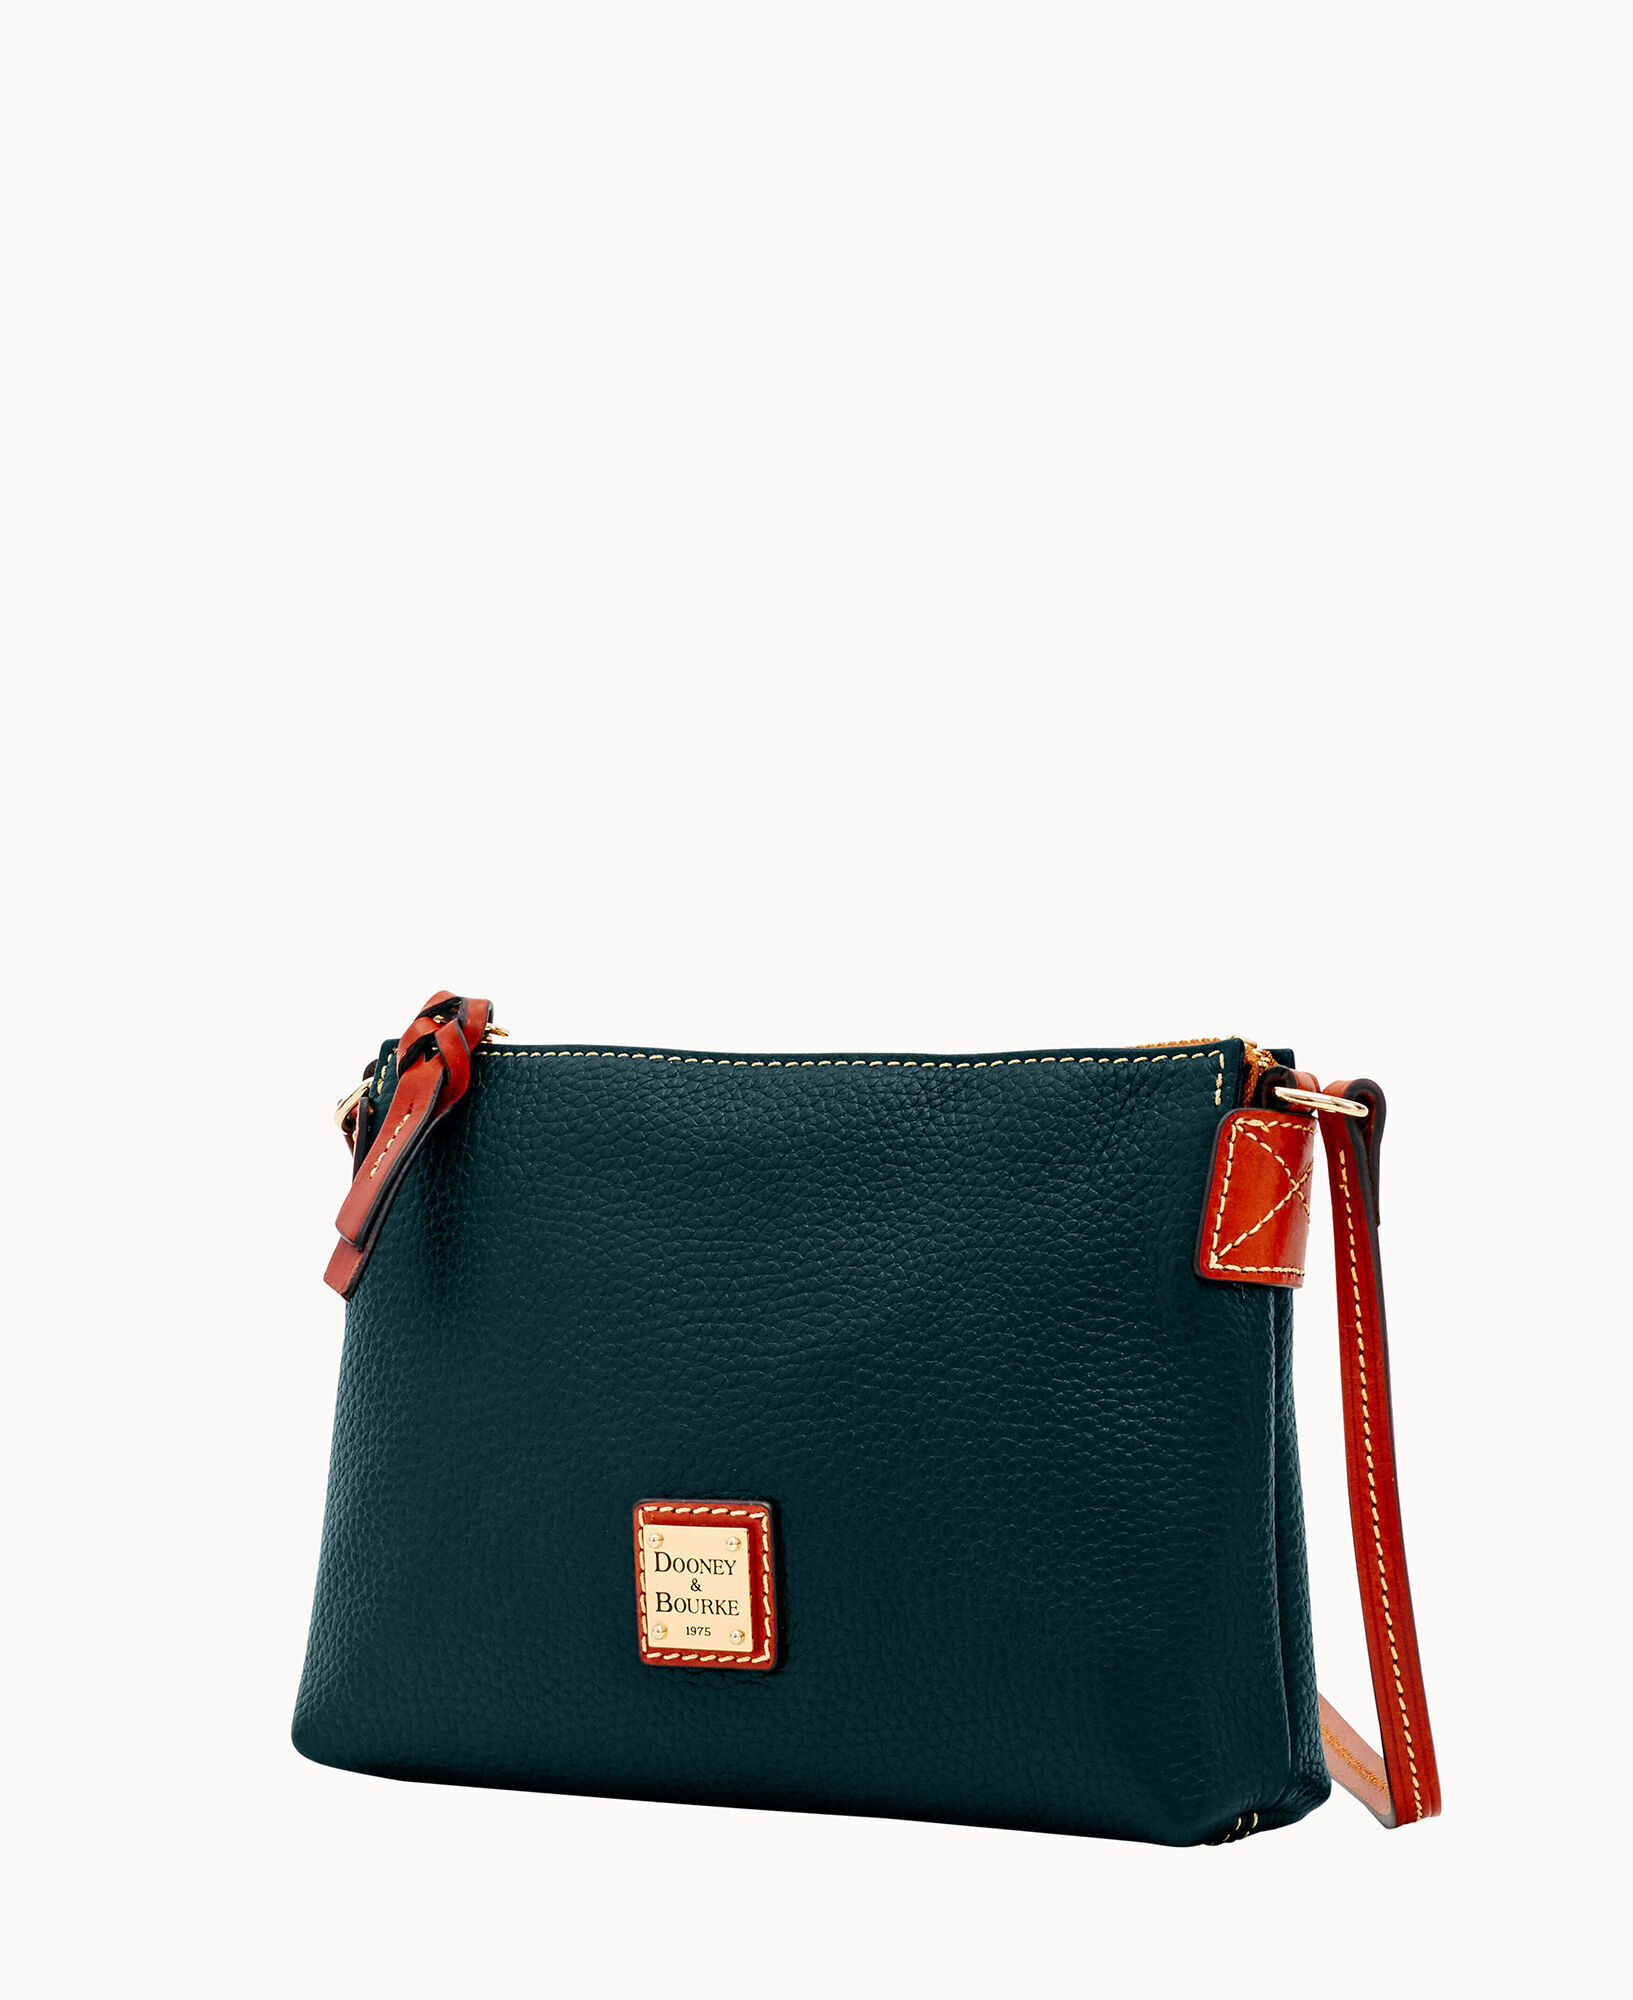 Dooney & Bourke Pebble Crossbody Pouchette Handbags Black : One Size